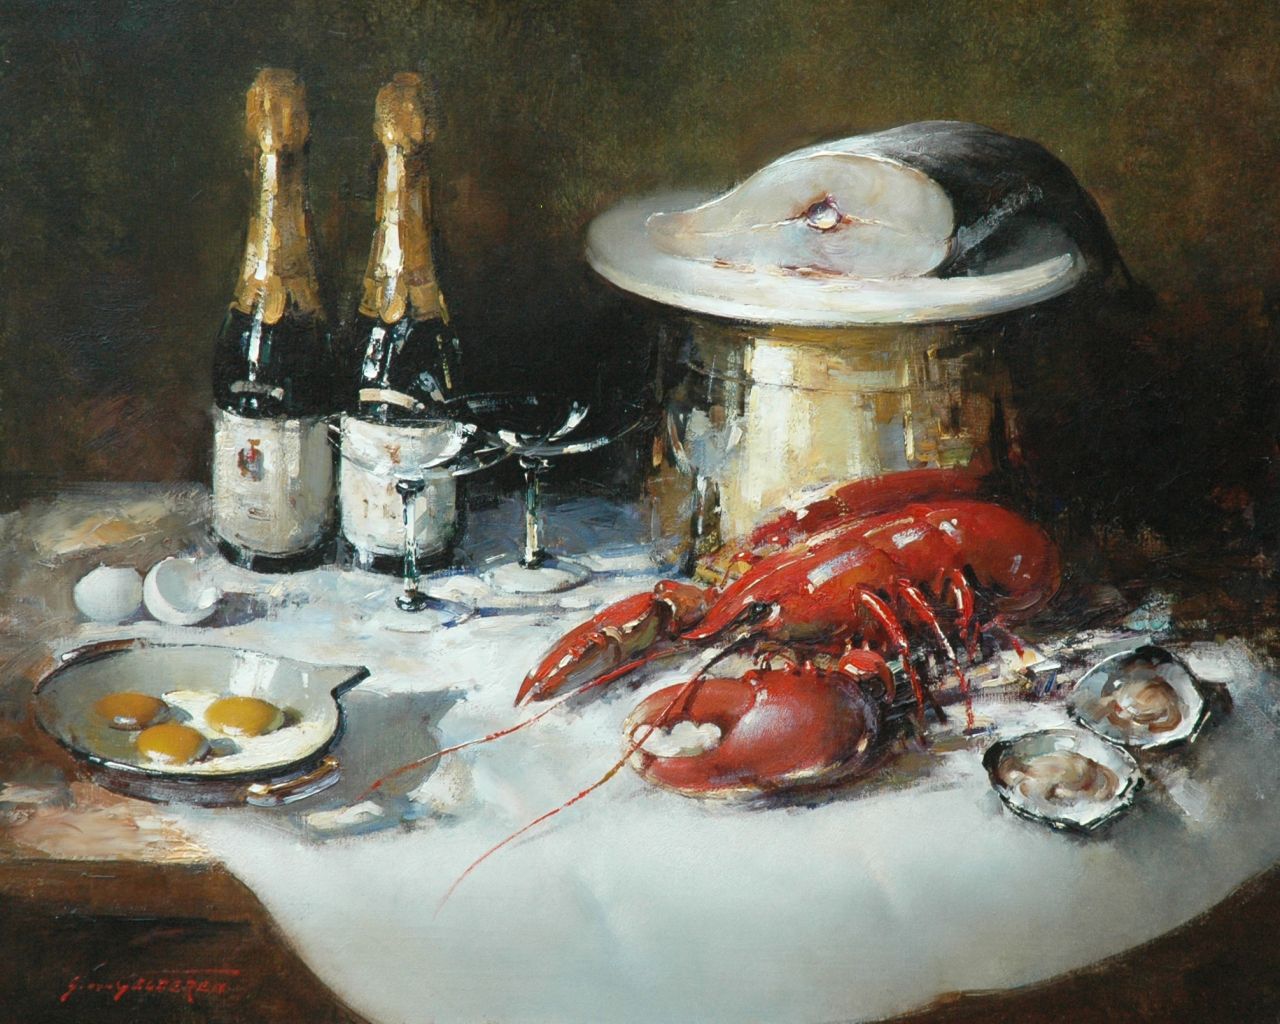 Gelderen S. van | Simon van Gelderen, Still life with a lobster, a fish and champagne, oil on canvas 65.2 x 80.1 cm, signed l.l.